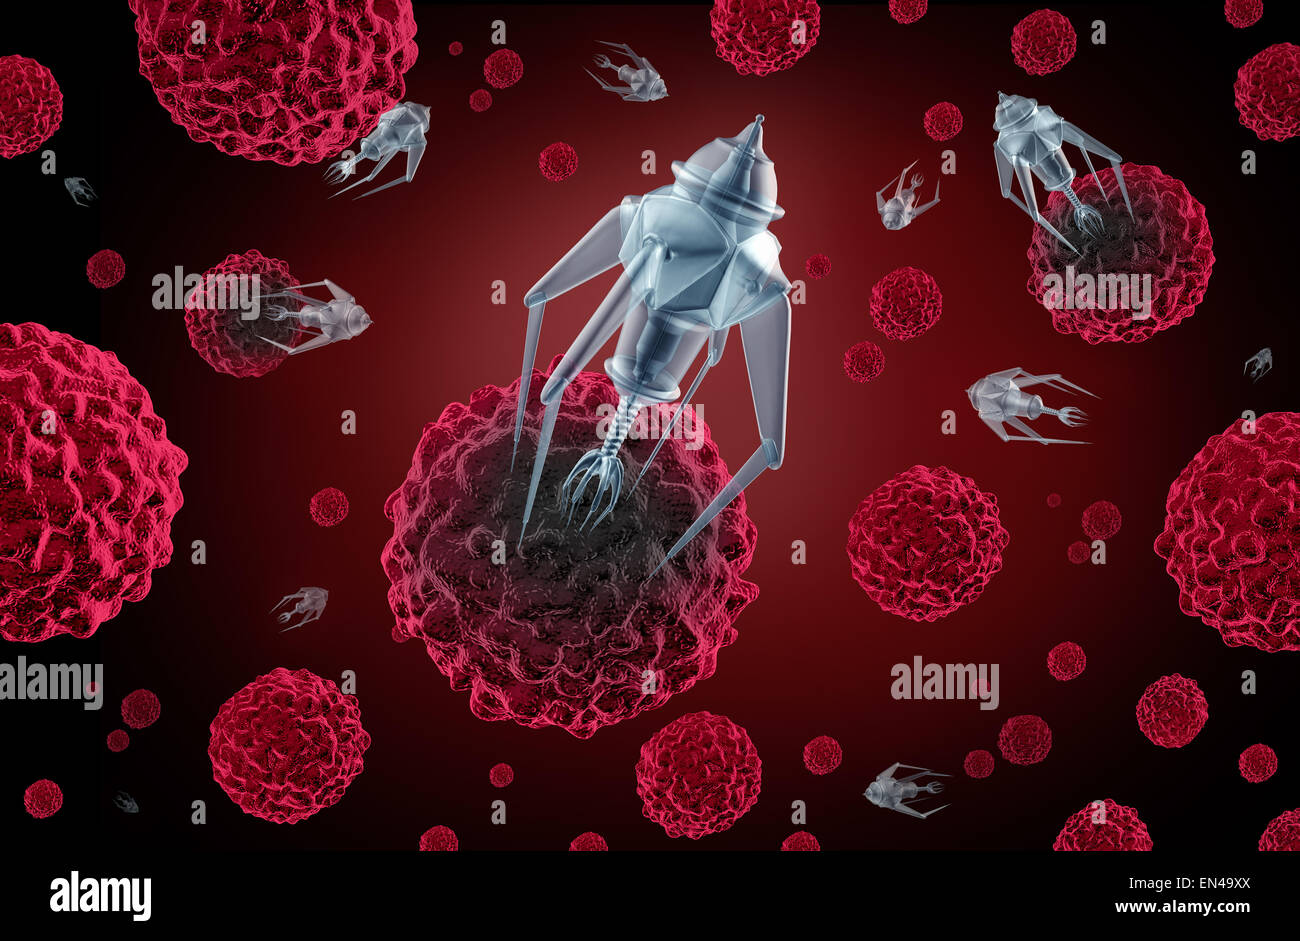 Concepto de medicina nanotecnología como un grupo de nano robots nanobots microscópica o programarse para matar las células del cáncer o enfermedad humana como una cura de salud futurista símbolo. Foto de stock